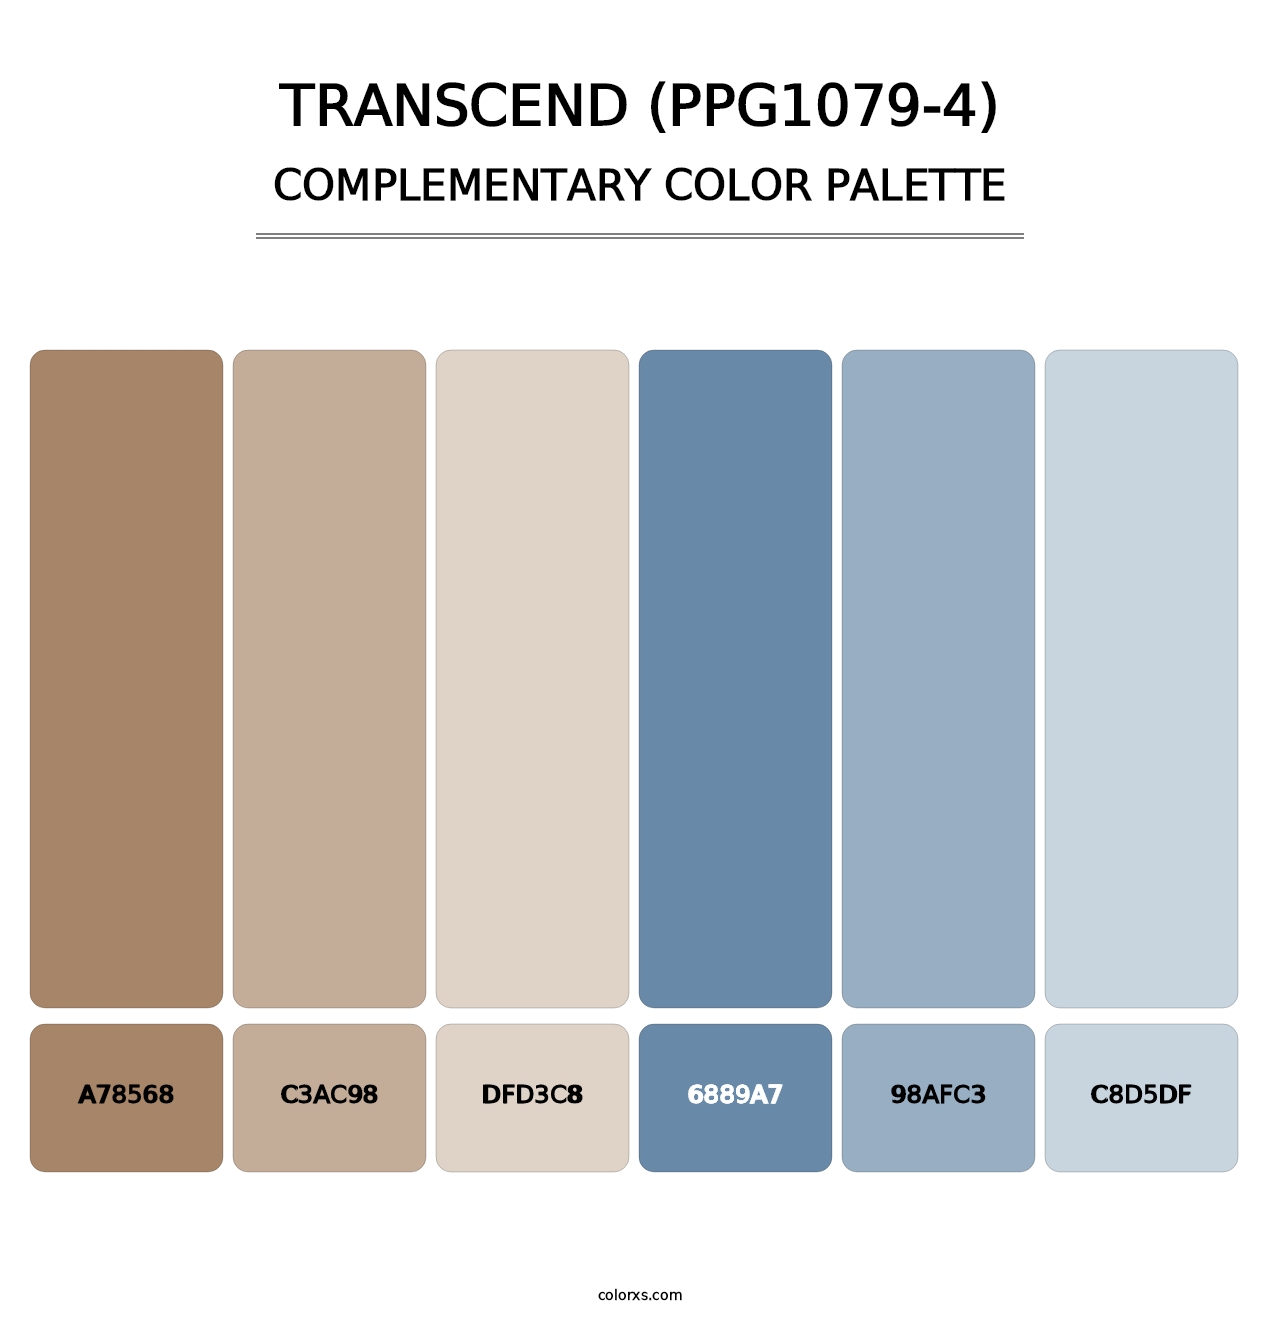 Transcend (PPG1079-4) - Complementary Color Palette